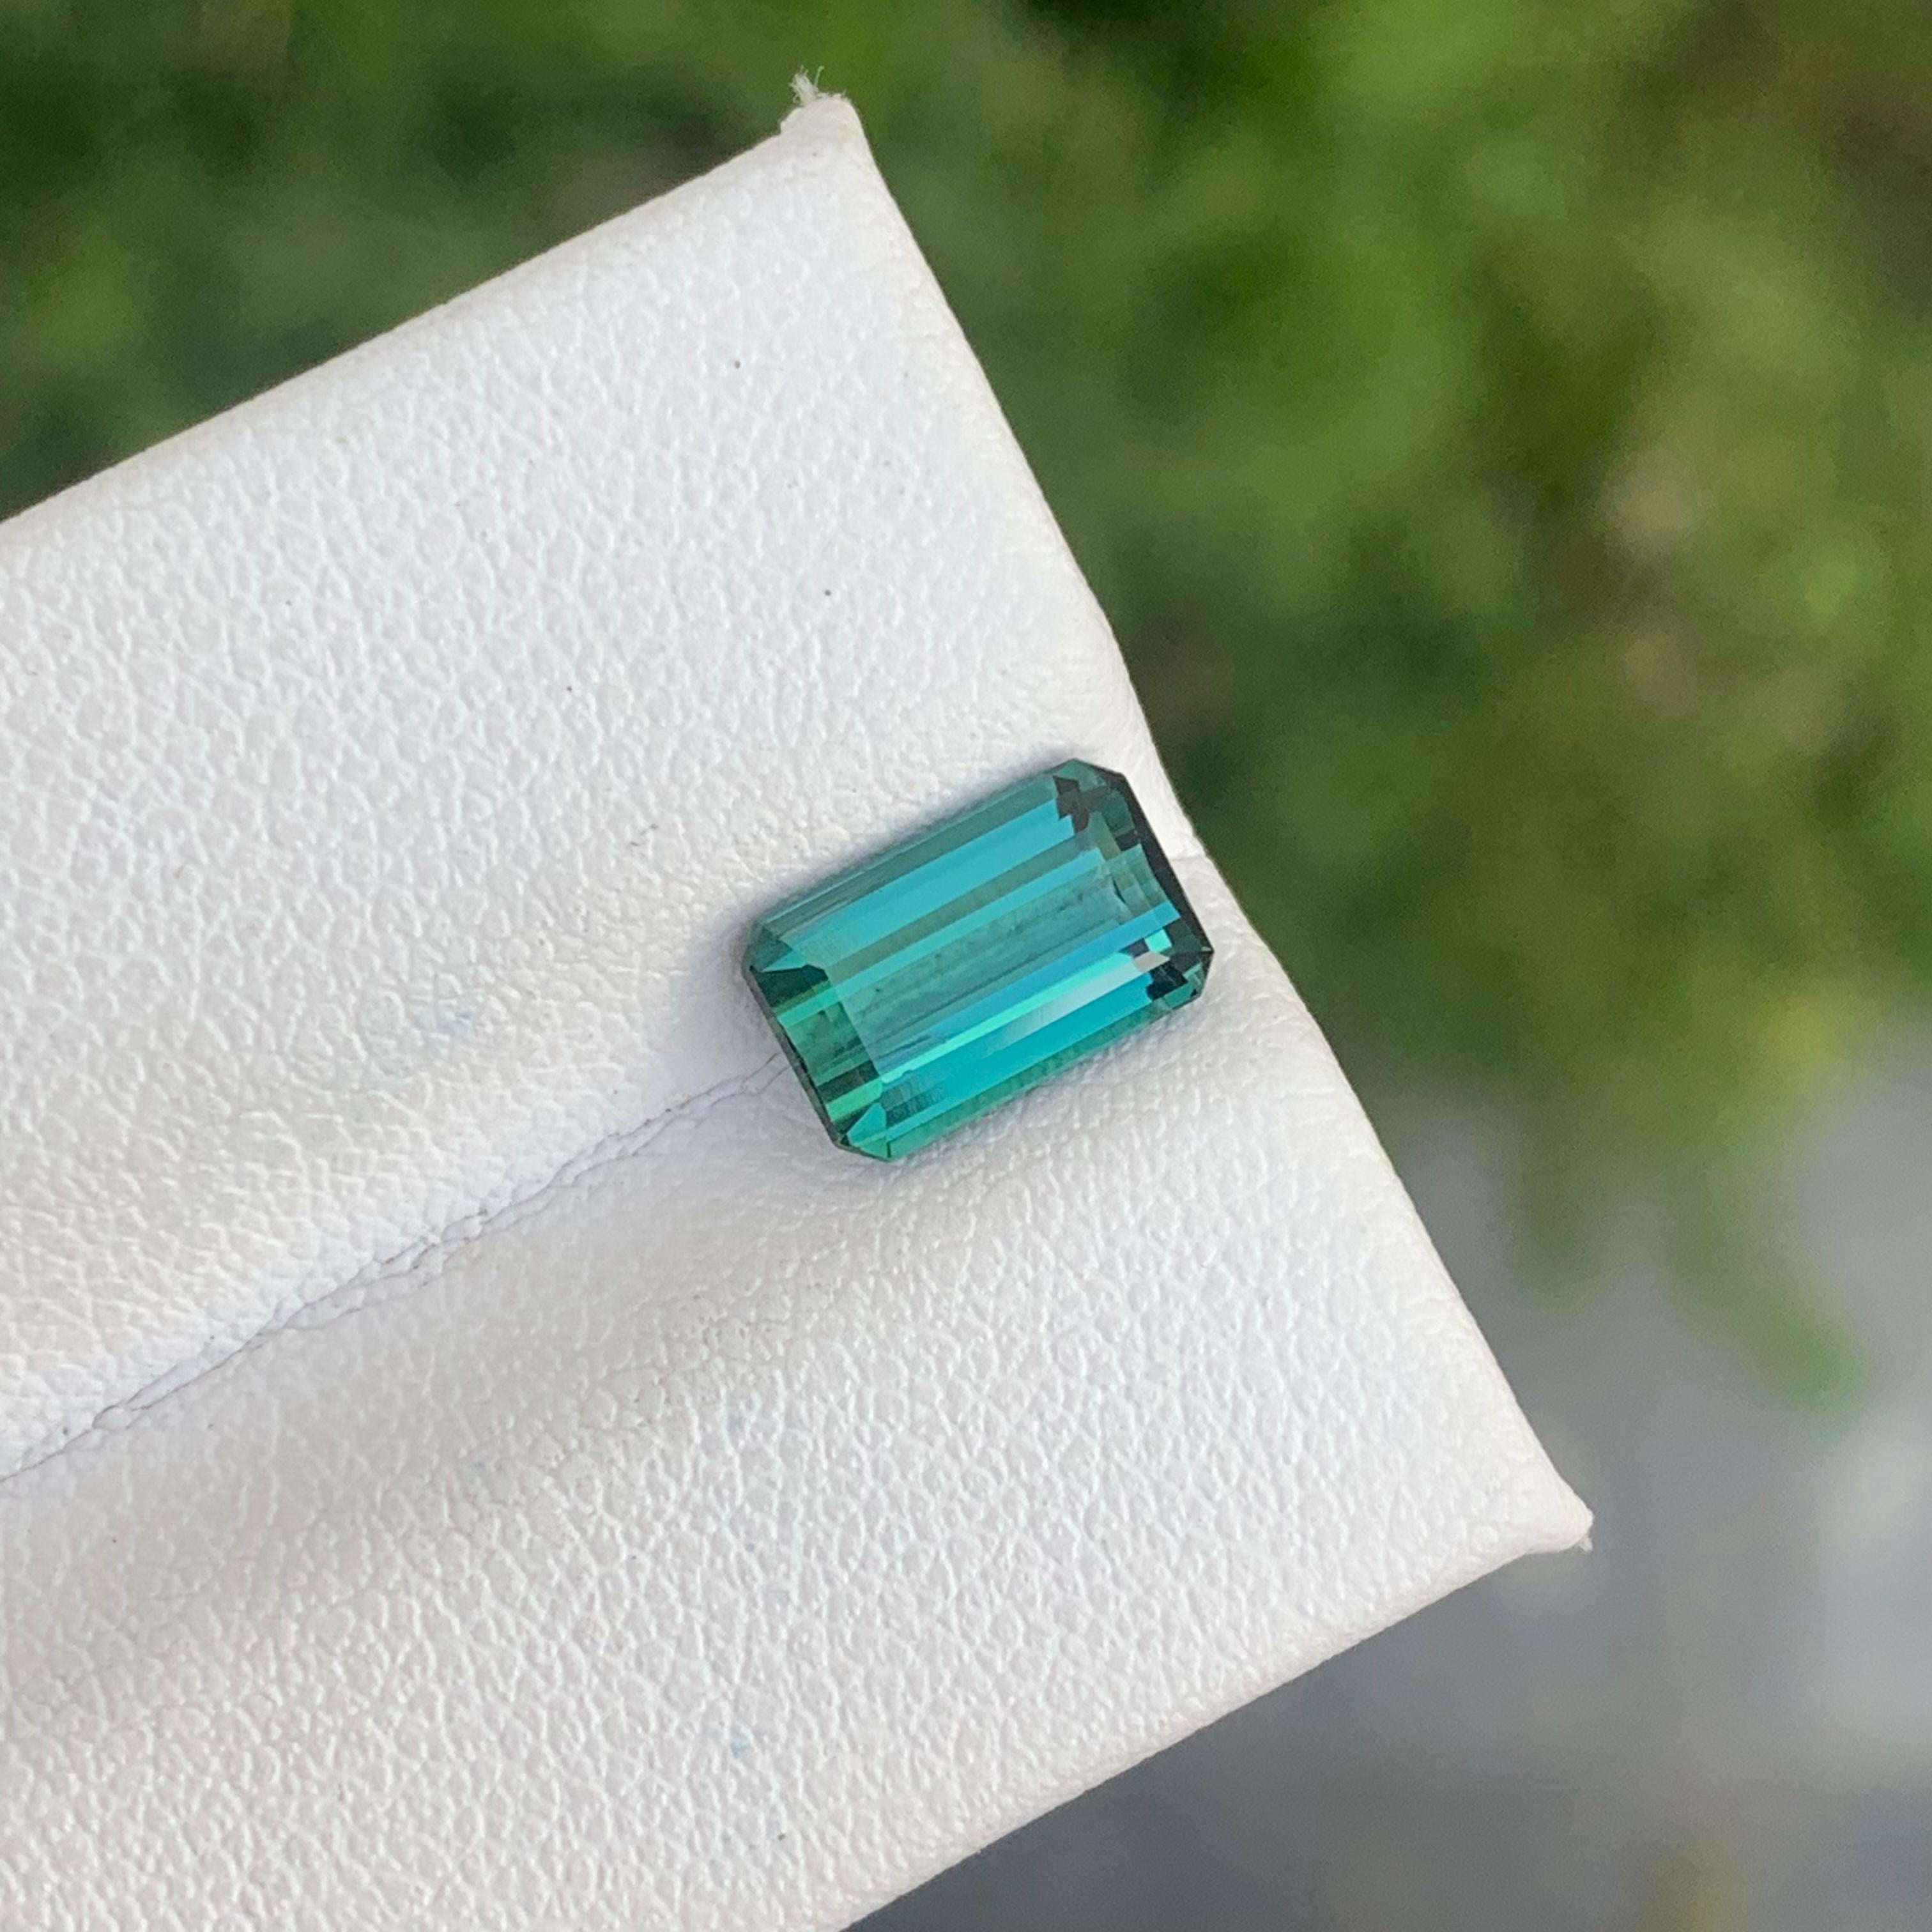 Genuine 1.90 Carat Natural Loose Indicolite Tourmaline Emerald Cut Gemstone For Sale 6